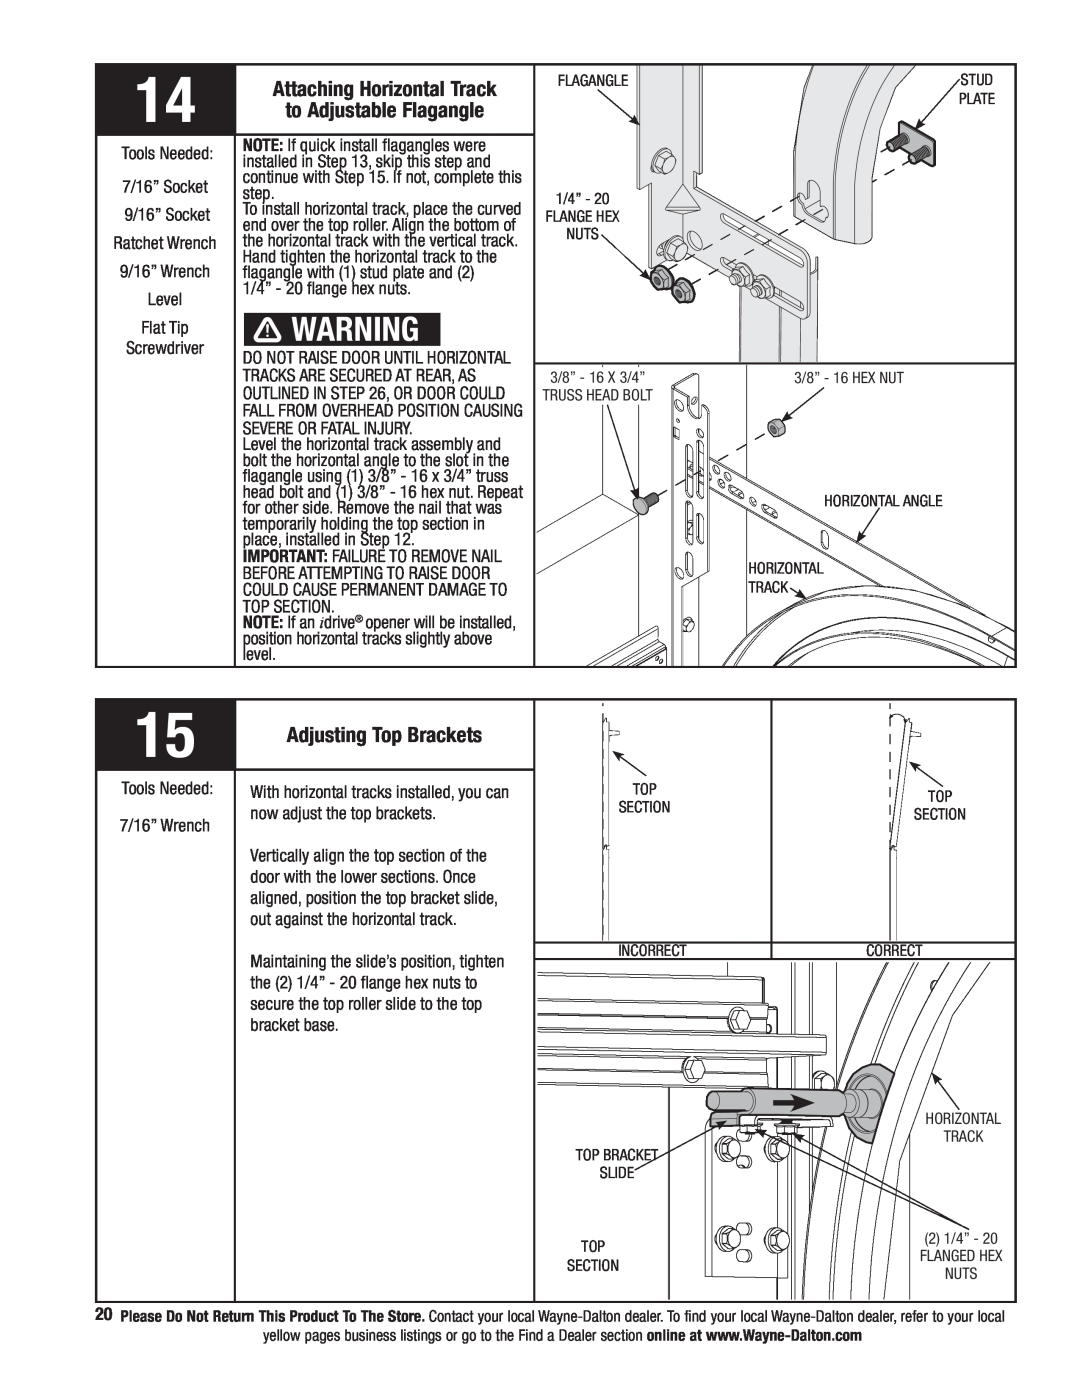 Wayne-Dalton 341458 installation instructions to Adjustable Flagangle, Attaching Horizontal Track, Adjusting Top Brackets 